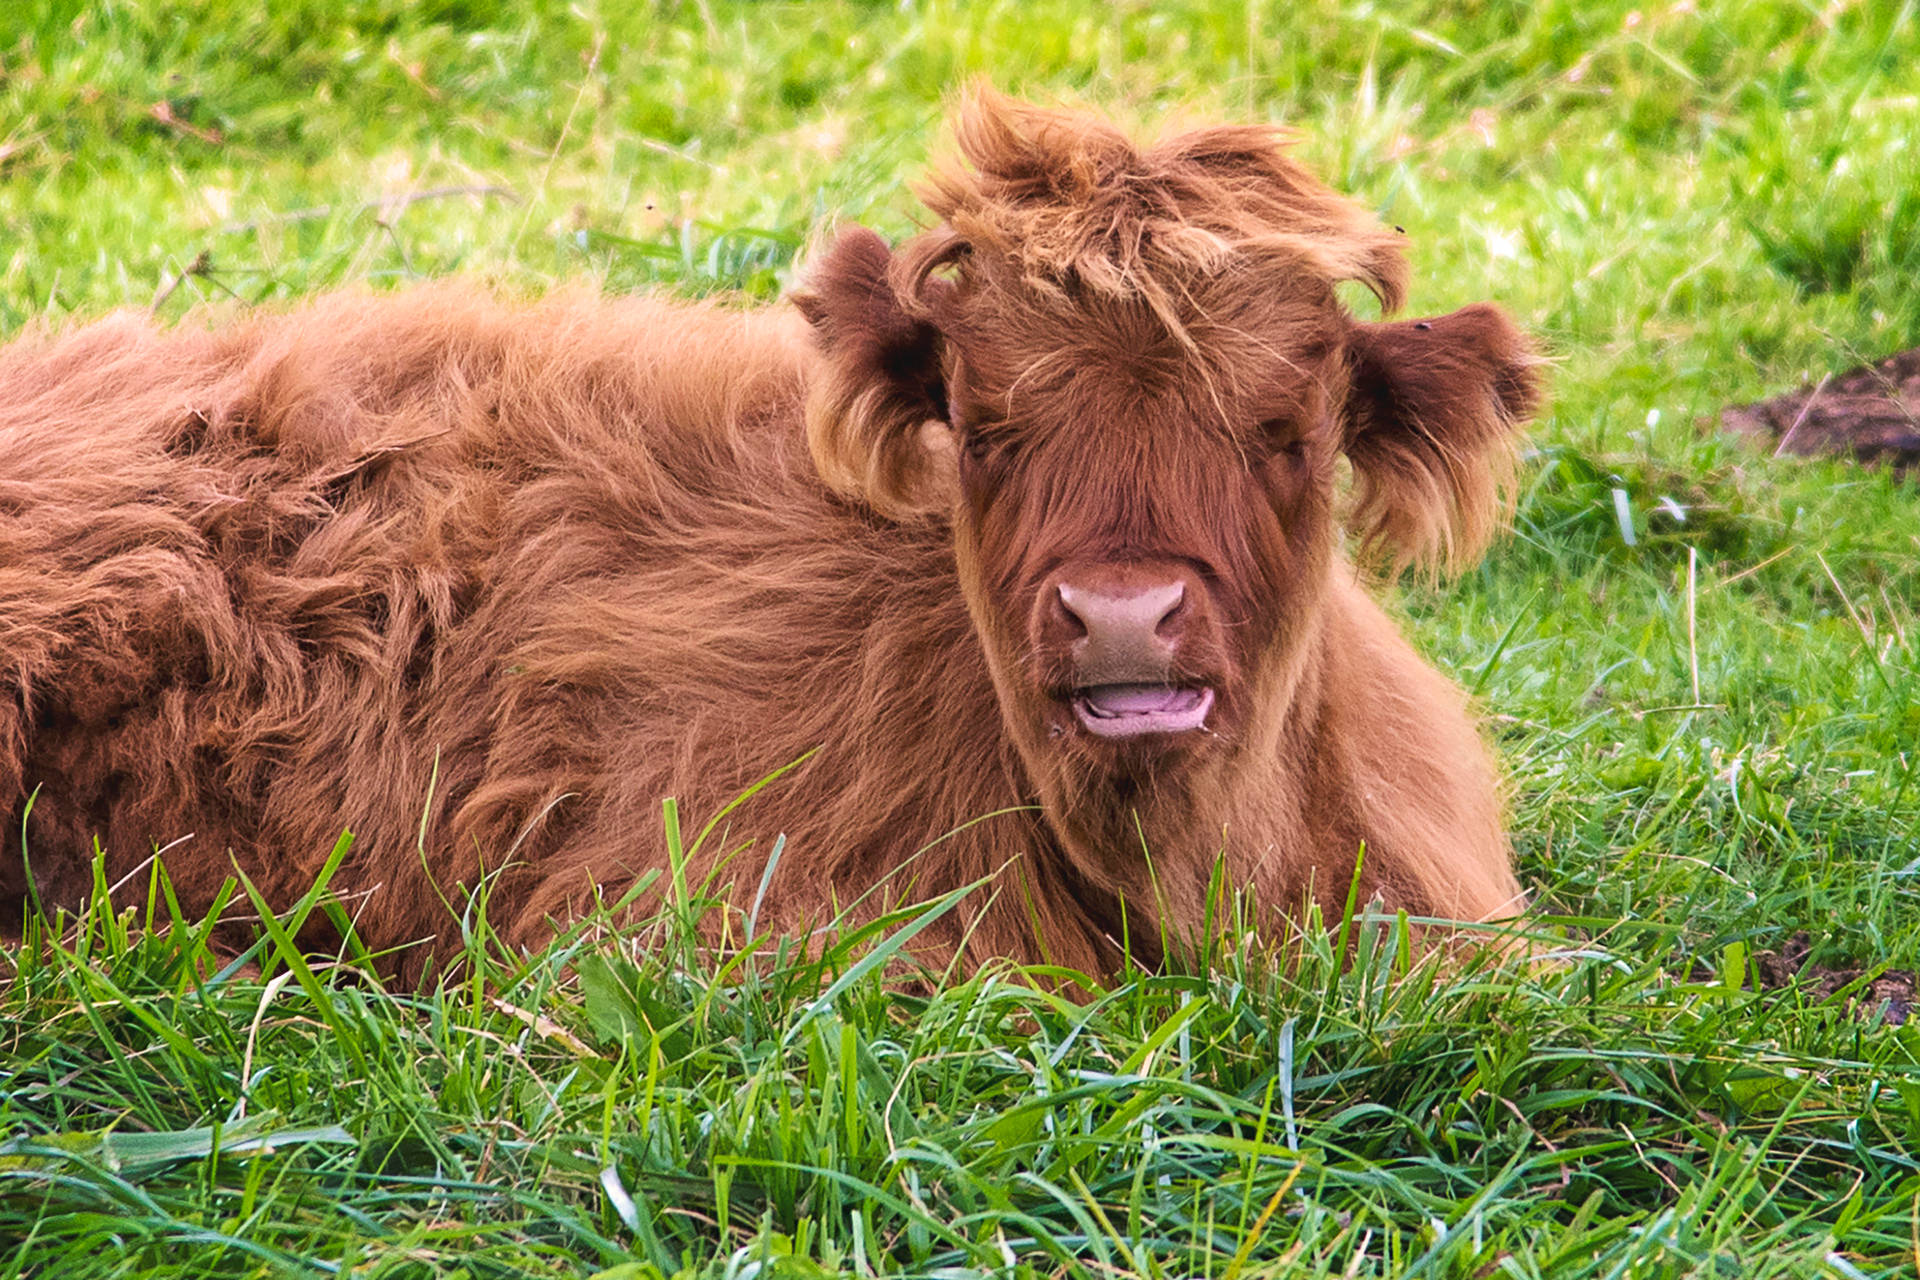 Cute Fluffy Cow Lying Down On Grass Wallpaper